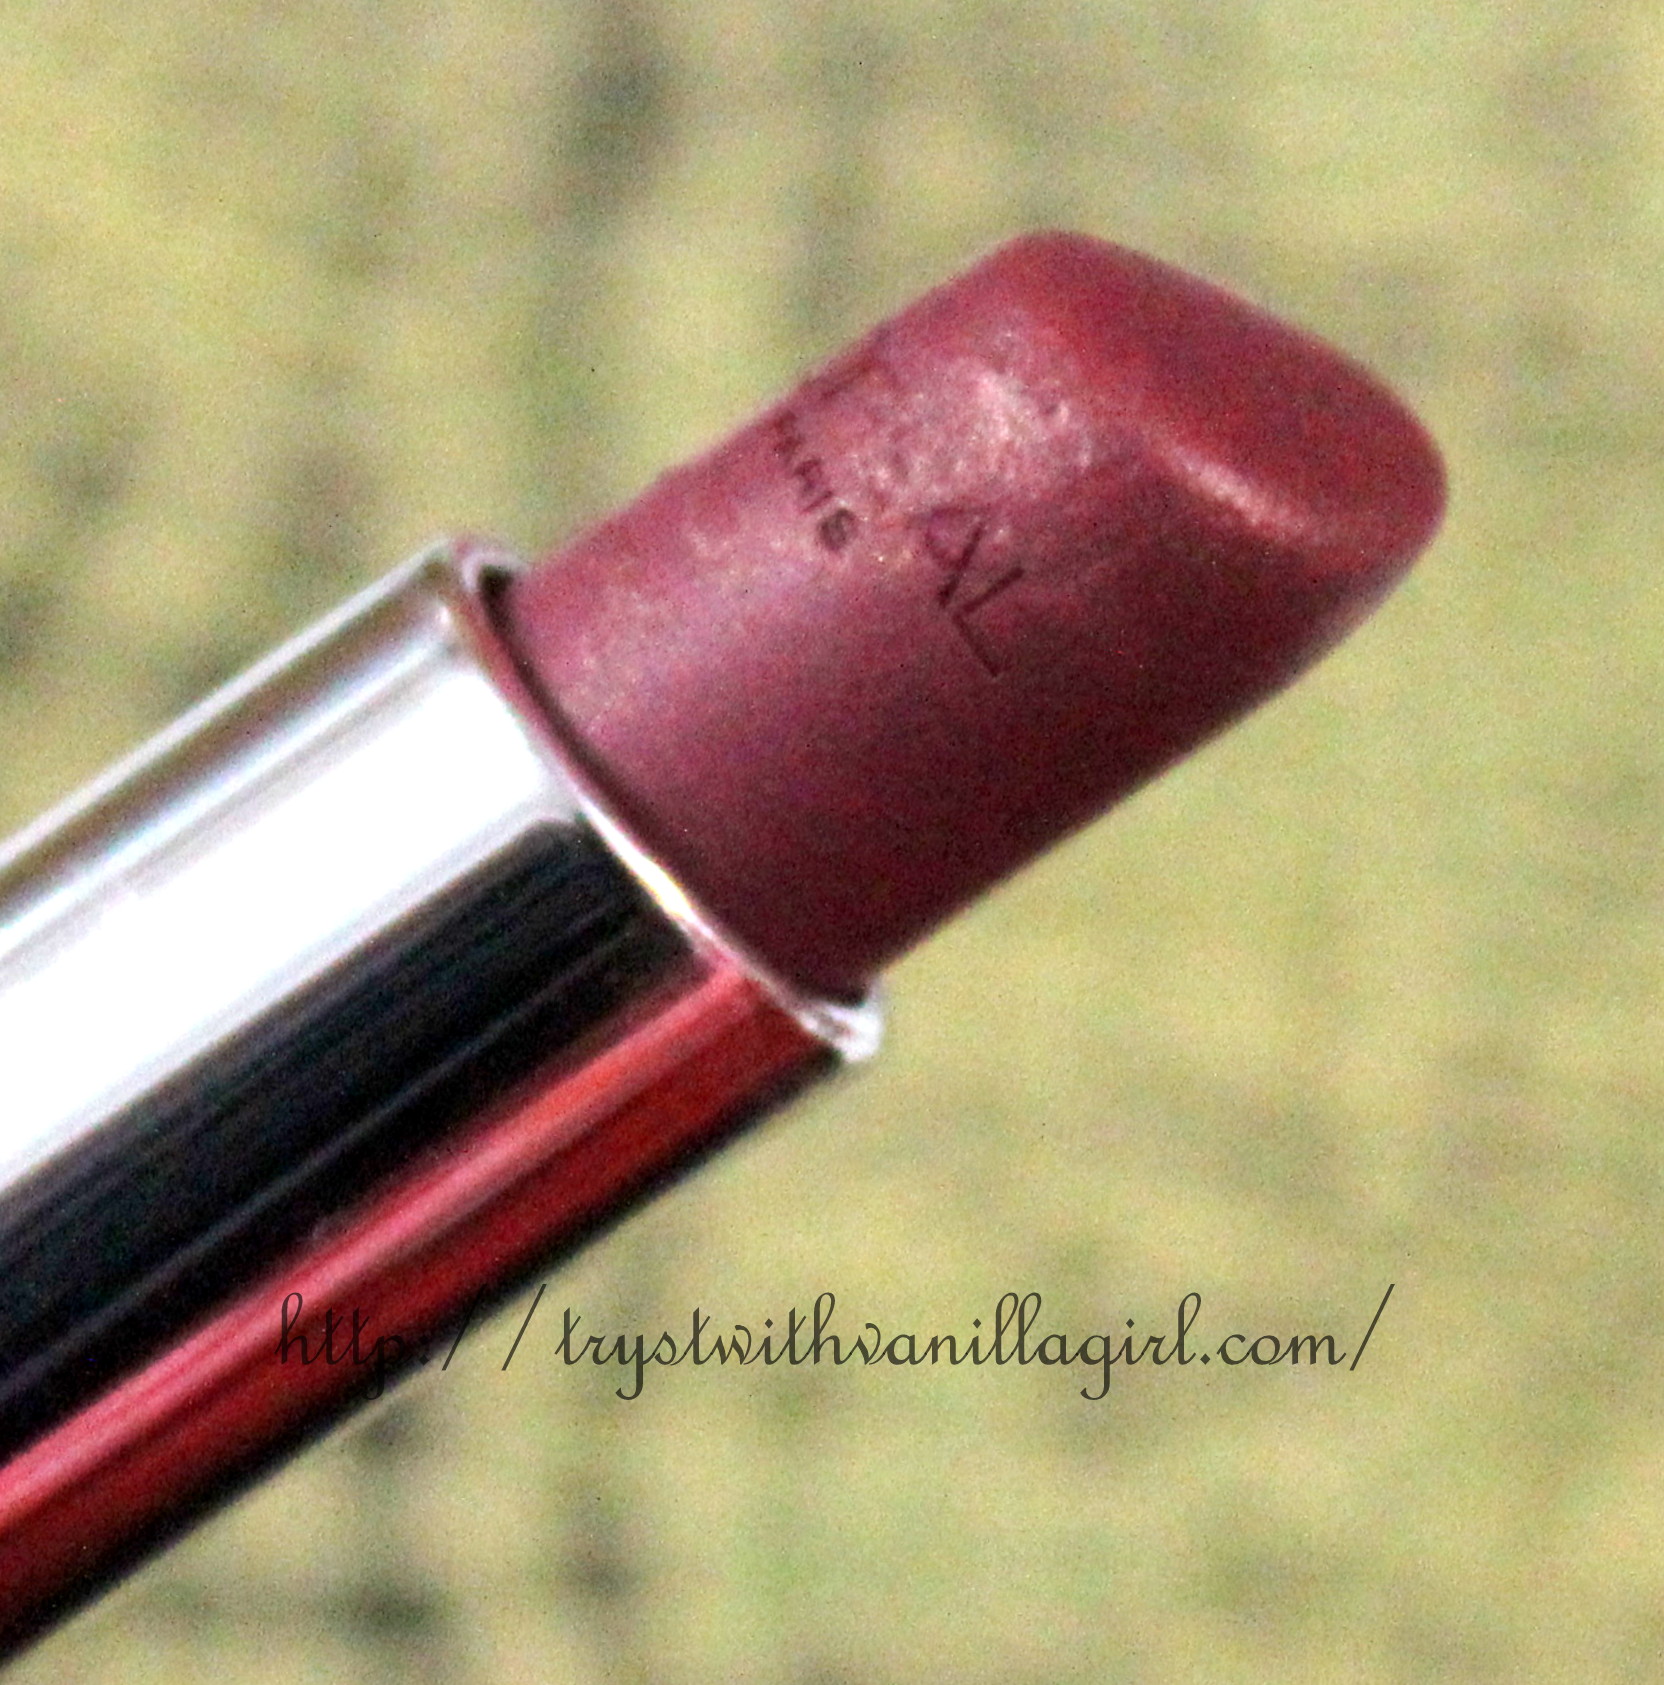 L'Oreal Paris Le Rouge Infallible Lipstick Rambling Rose 212 Review,Swatch,Photos